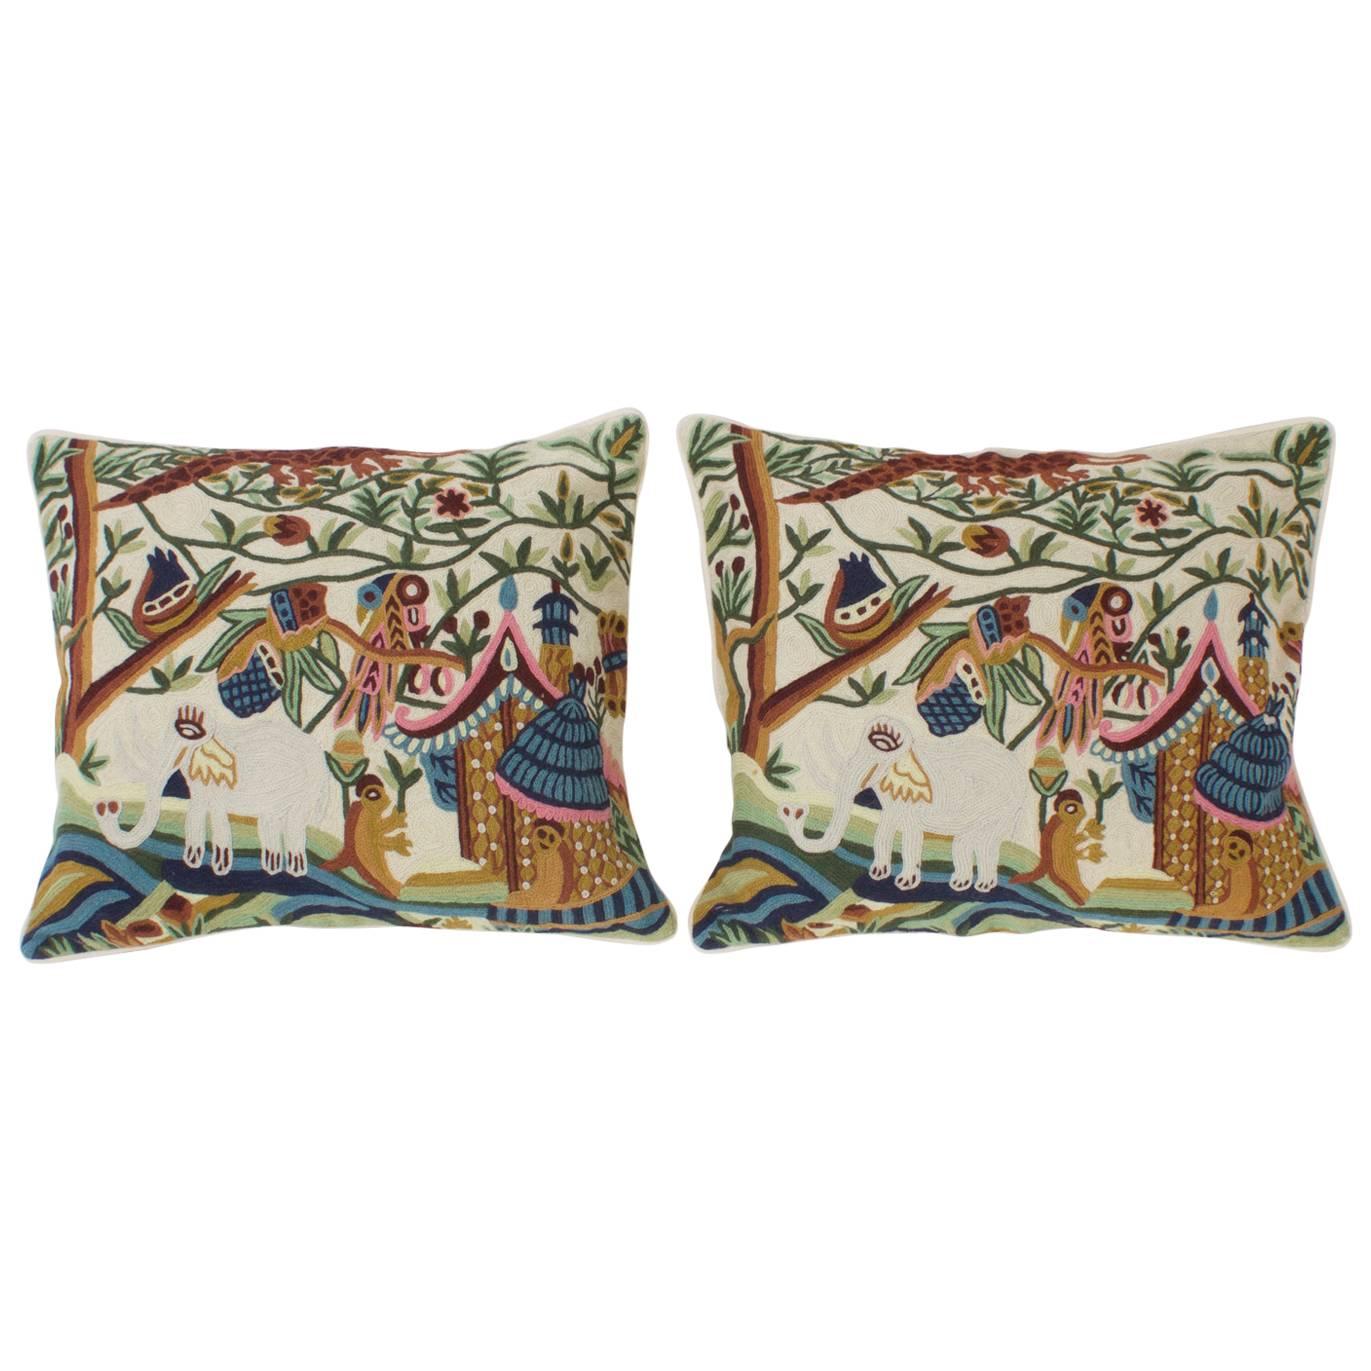 Pair of Indian Crewel Pillows, Priced Individually